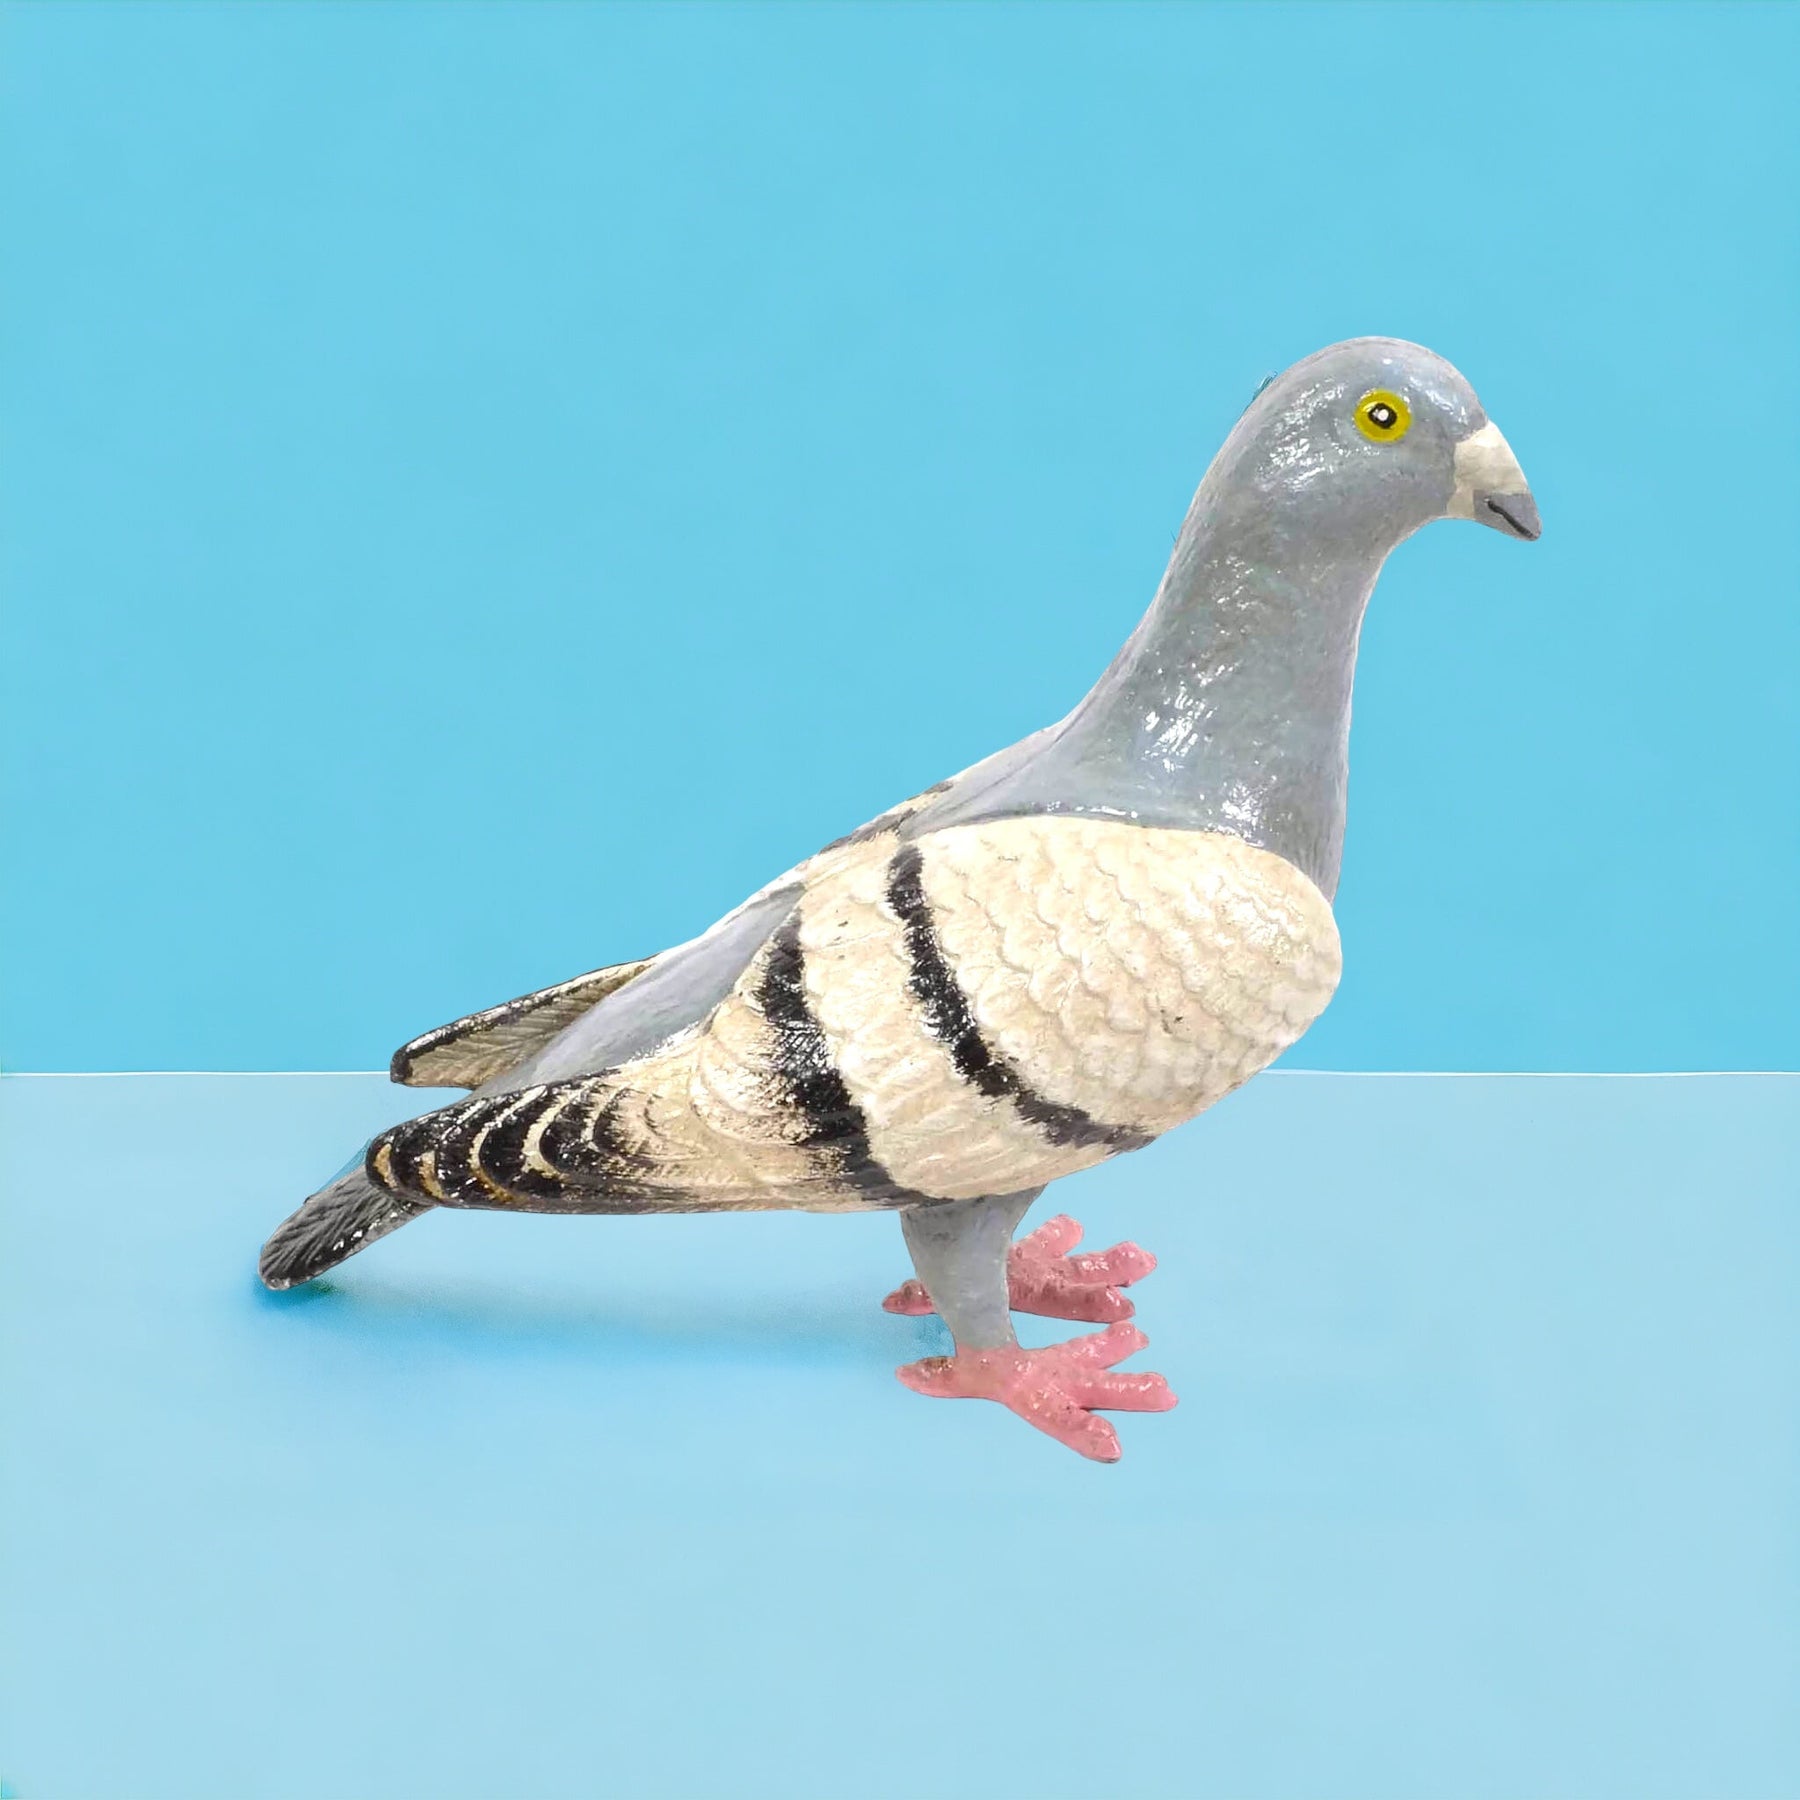 Racing pigeon hobby takes flight | Local News | mankatofreepress.com